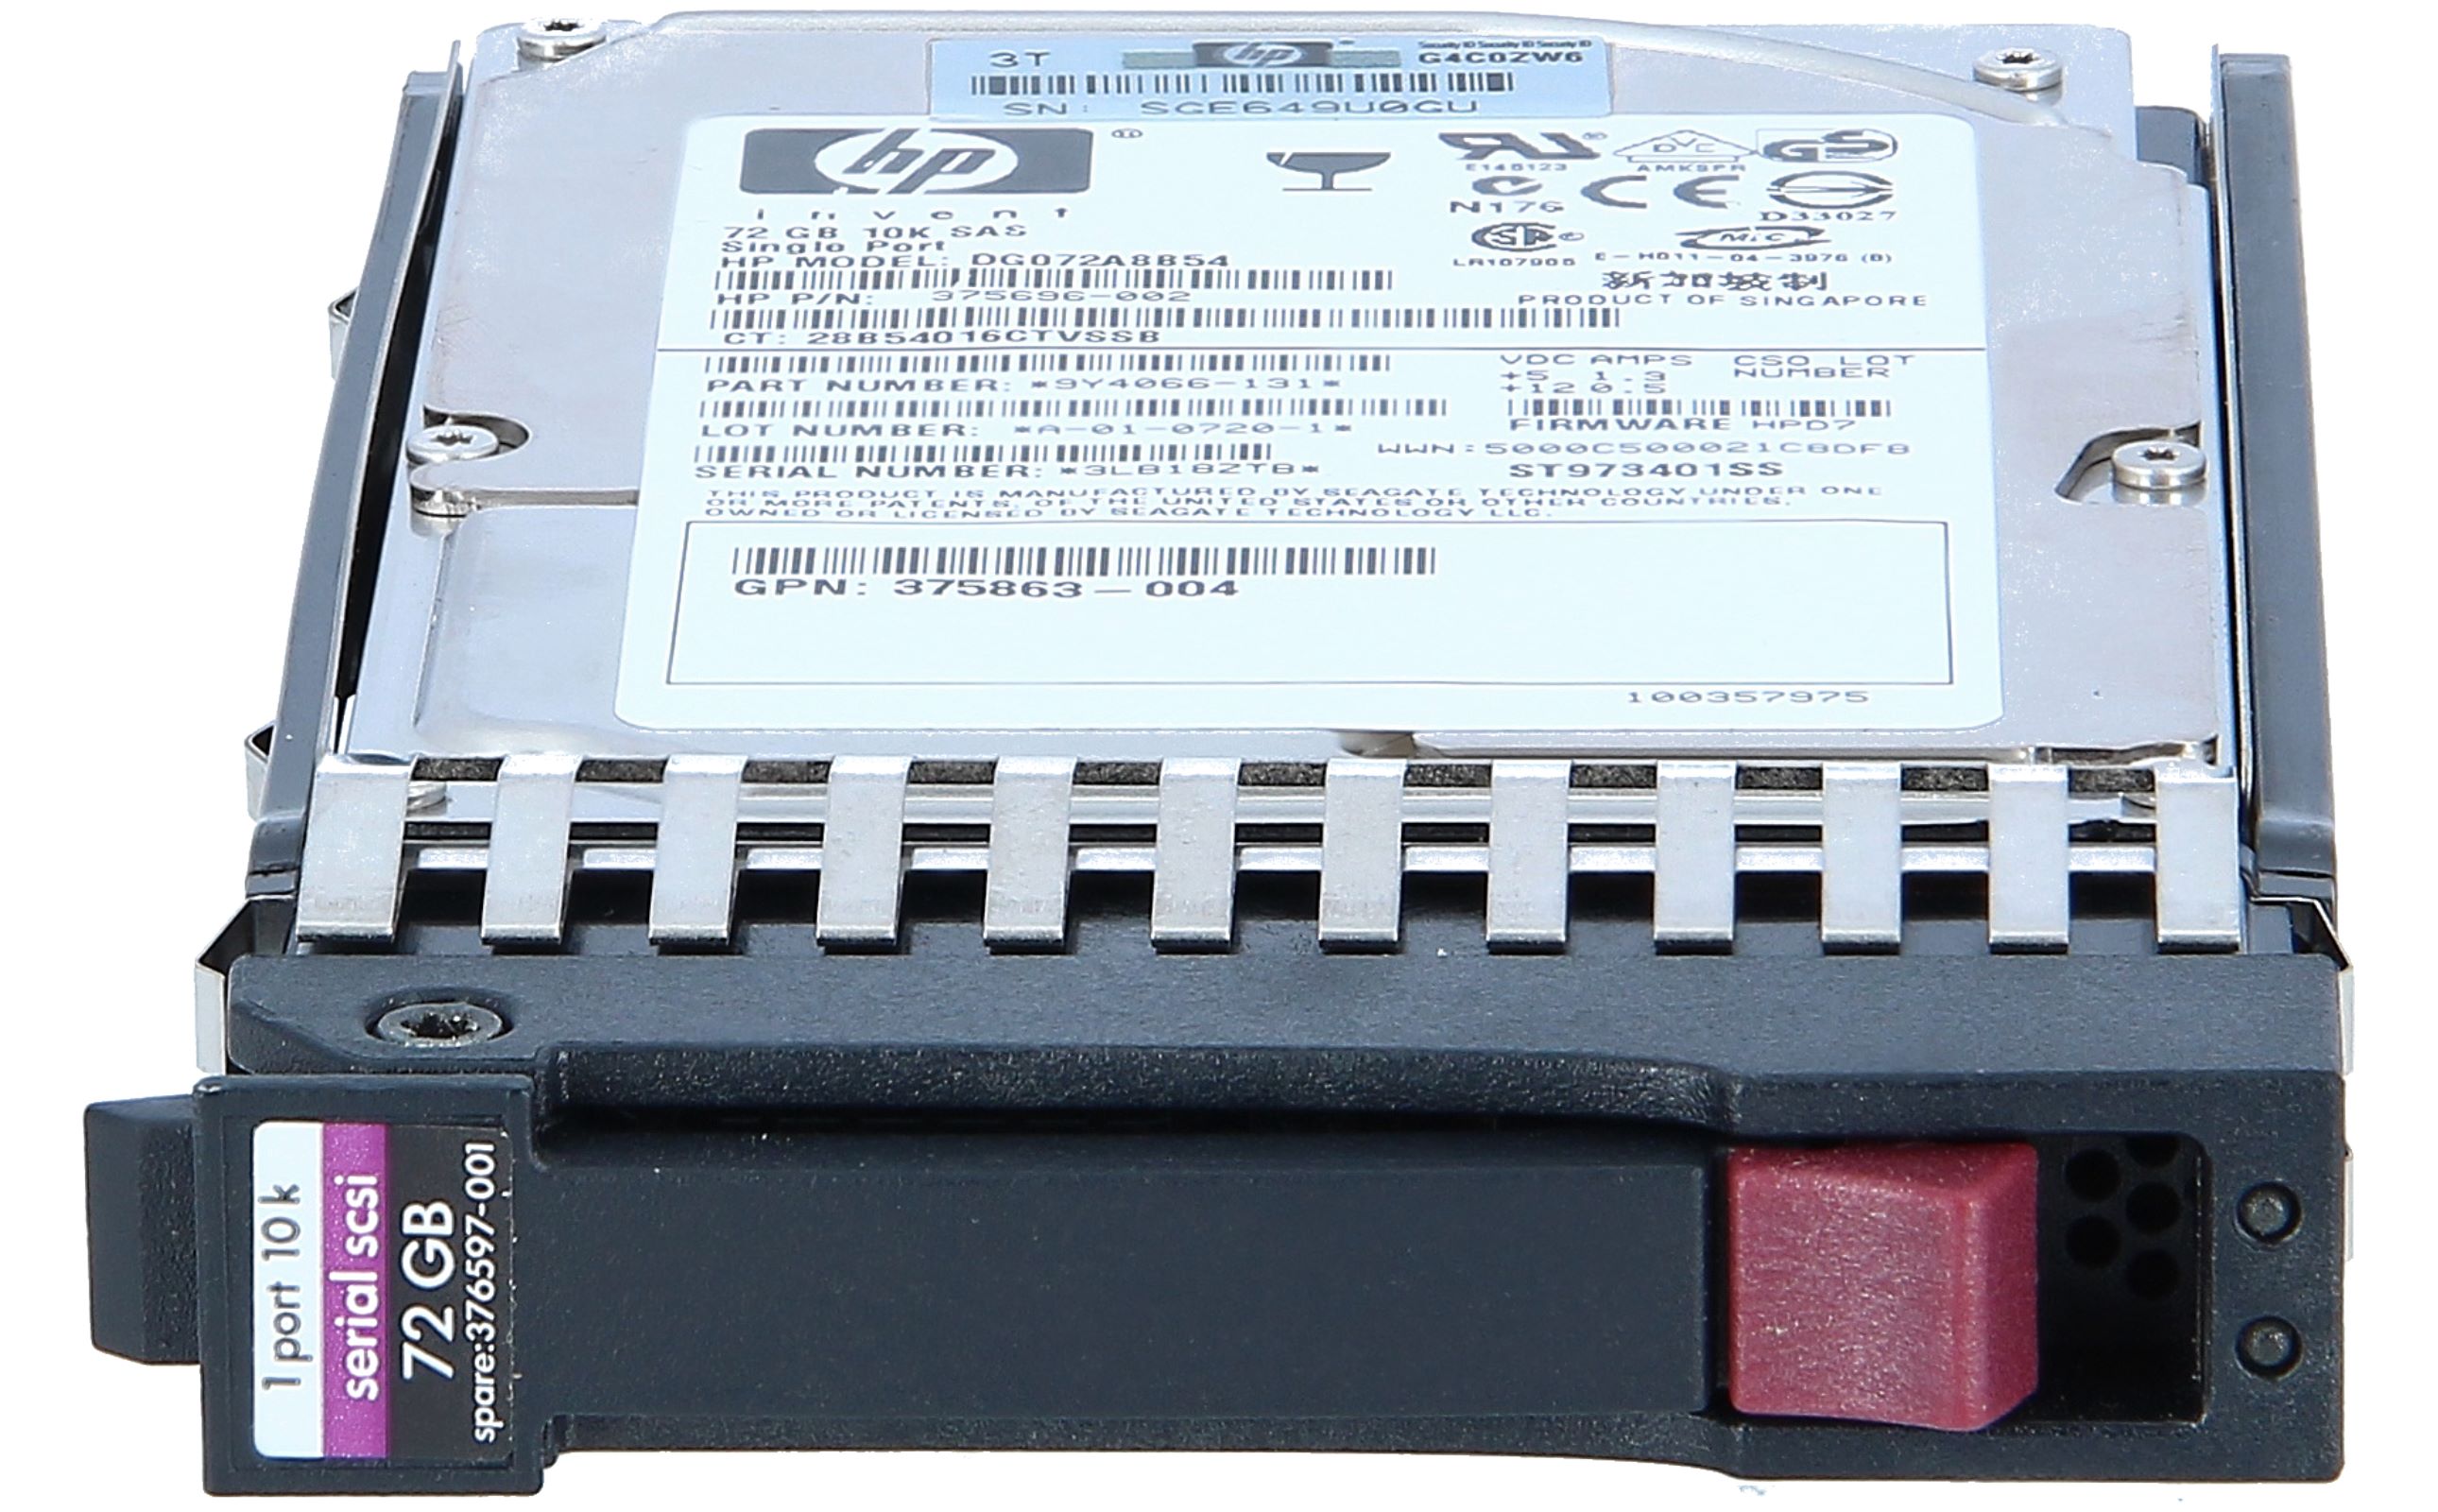 Ent HDD 2.5 Internal Bare/OEM Drive 507125-B21 Renewed Dual Port HP Inc-613567 146GB 6G Hot Plug SAS 10K Sff Dp